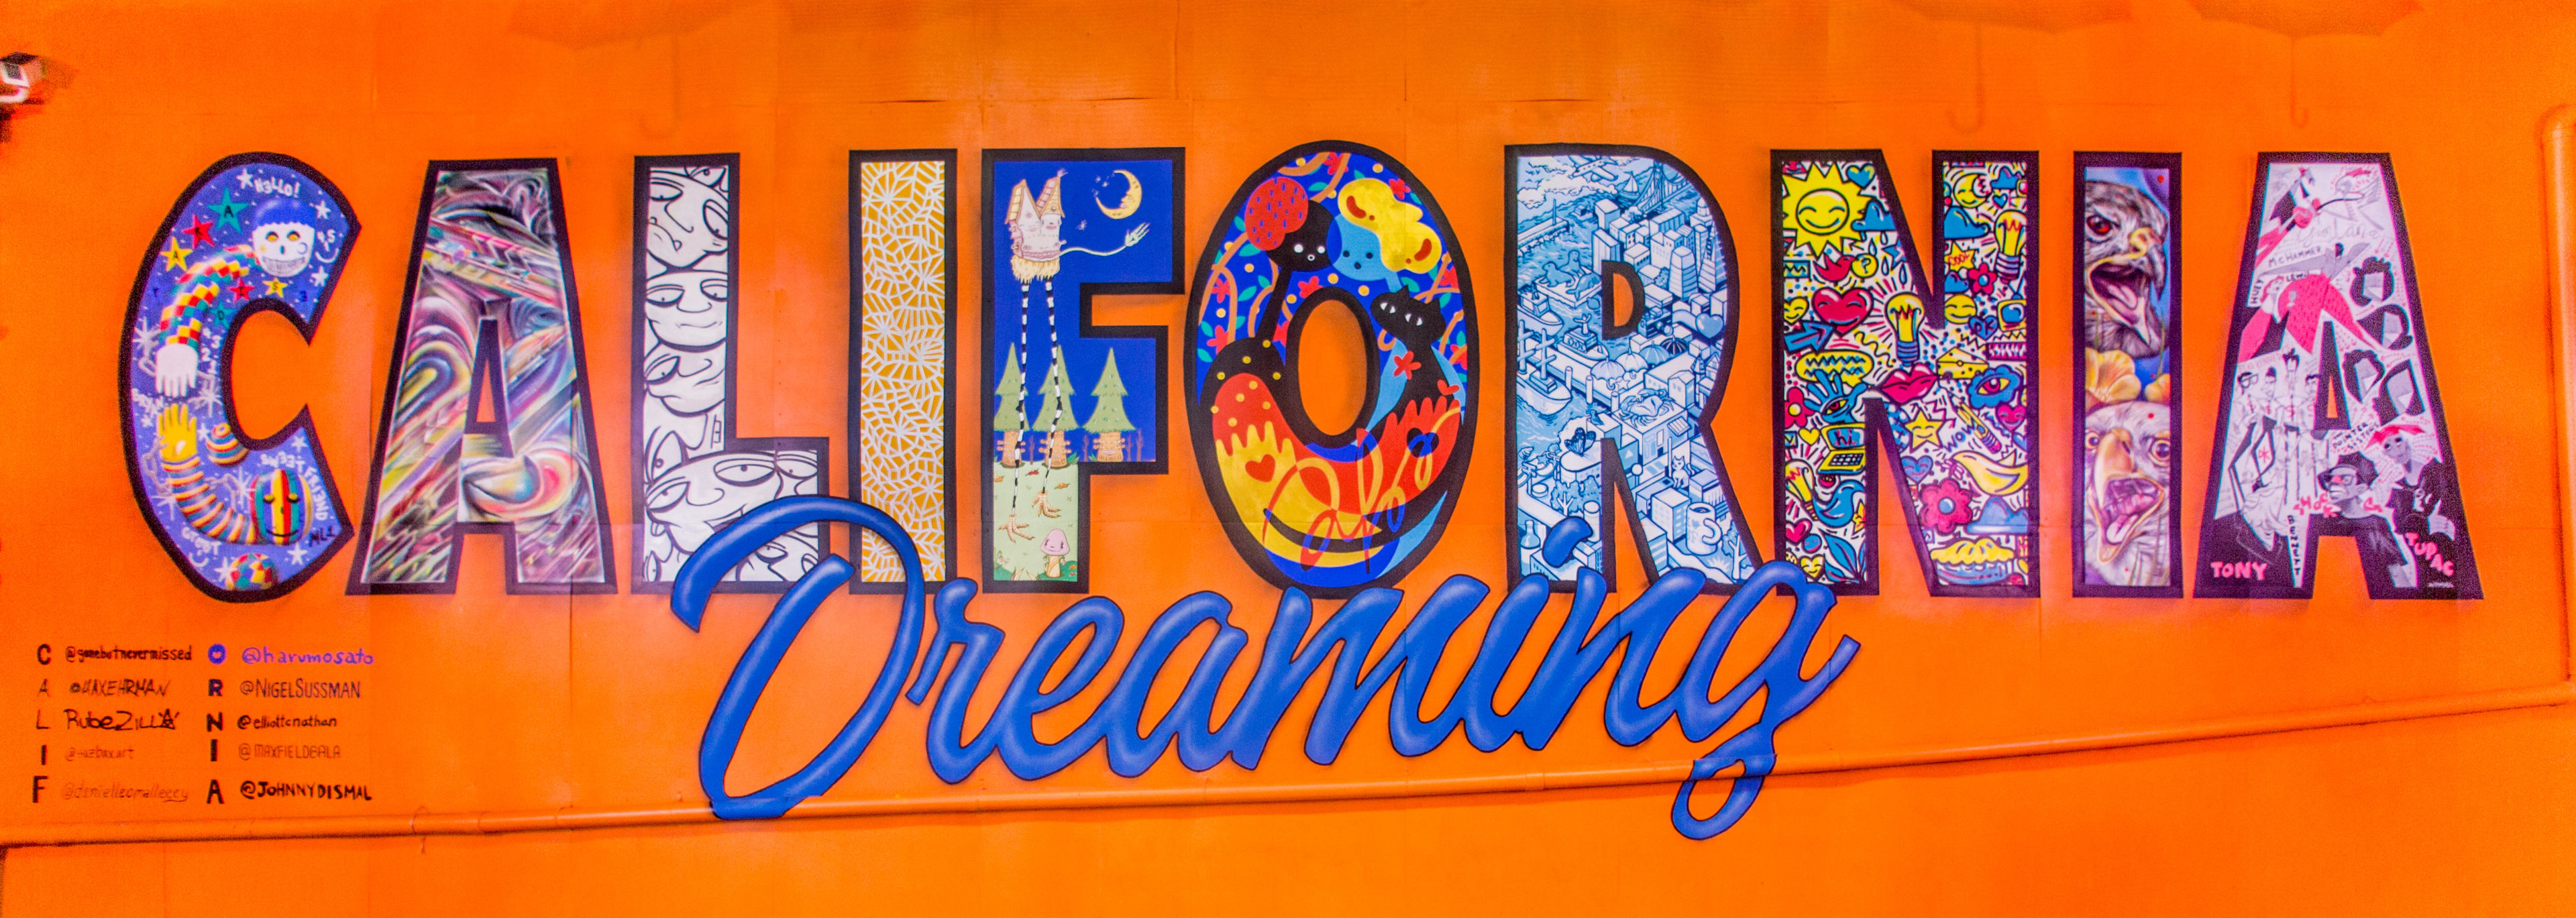 Barvita freska z napisom "California Dreaming" v ulici Umbrella Alley, Oakland, CA